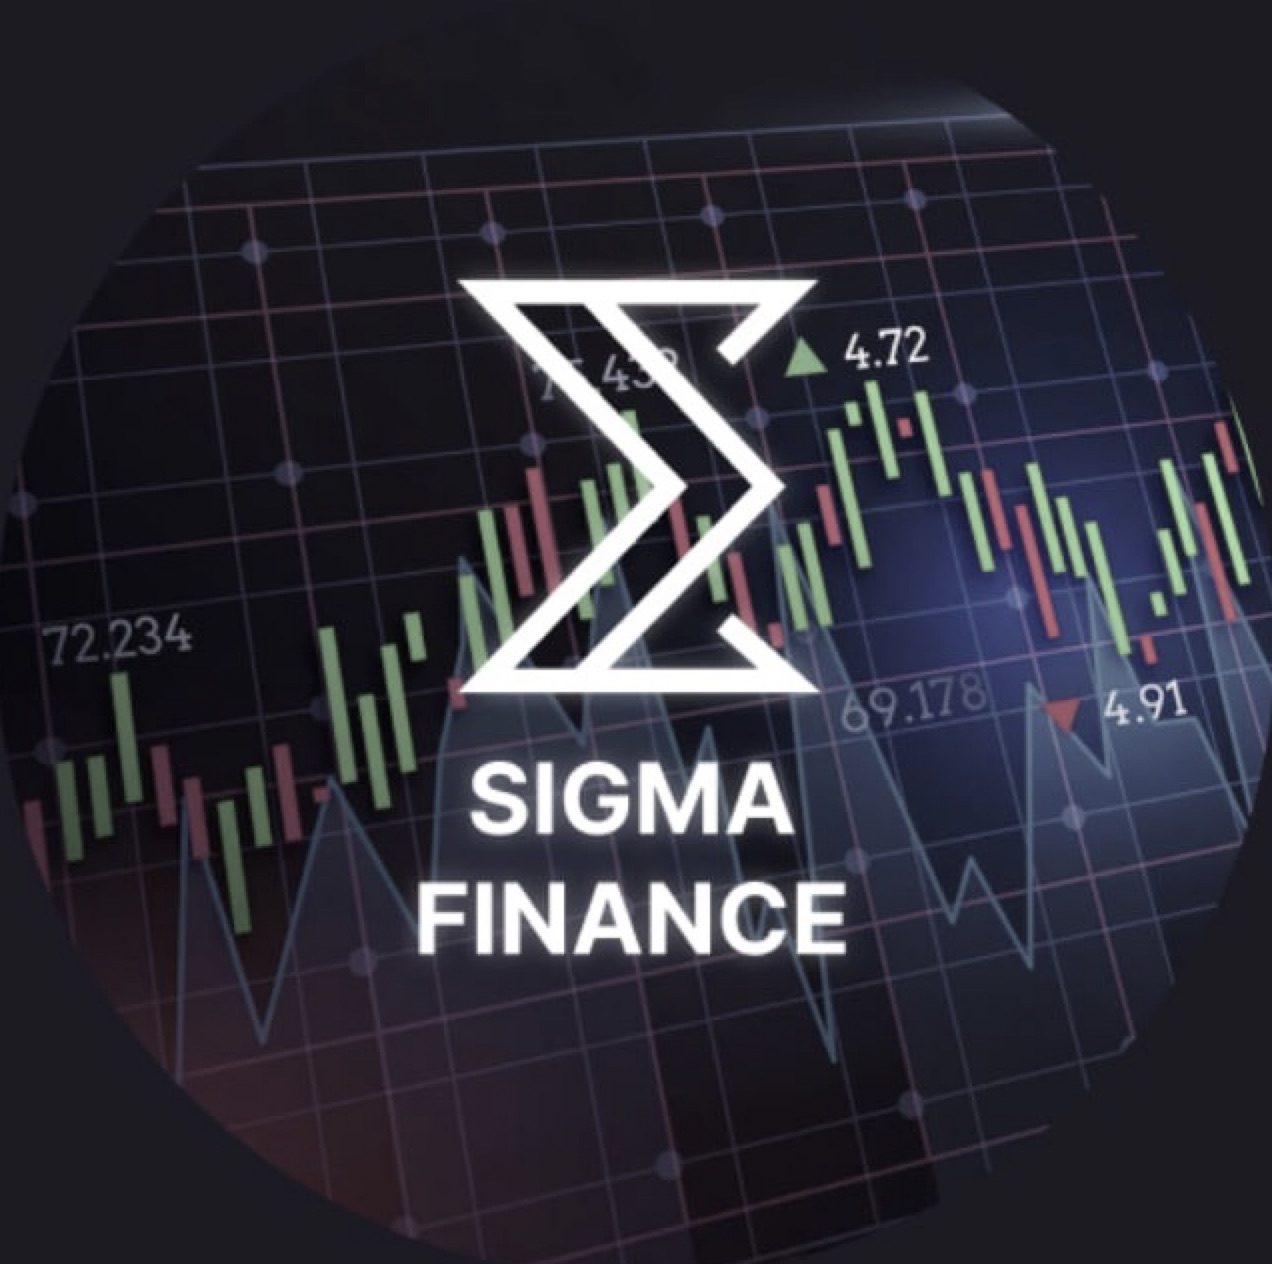 Sigma Finance